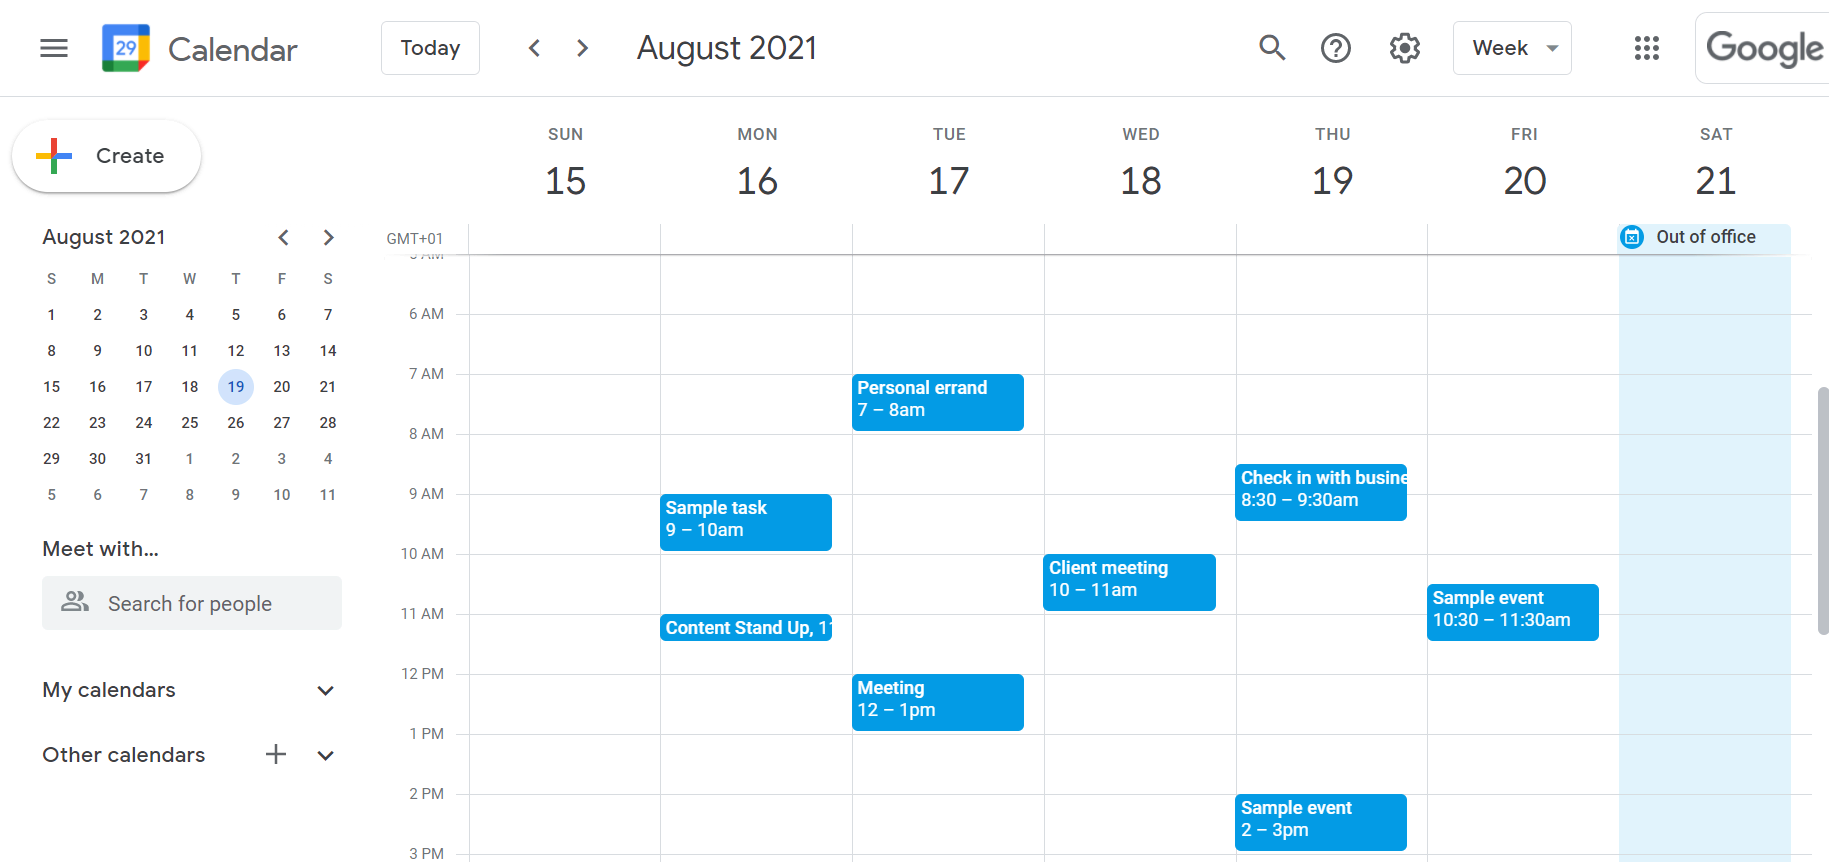 Freelancer's Guide to Google Workspace calendar screenshot